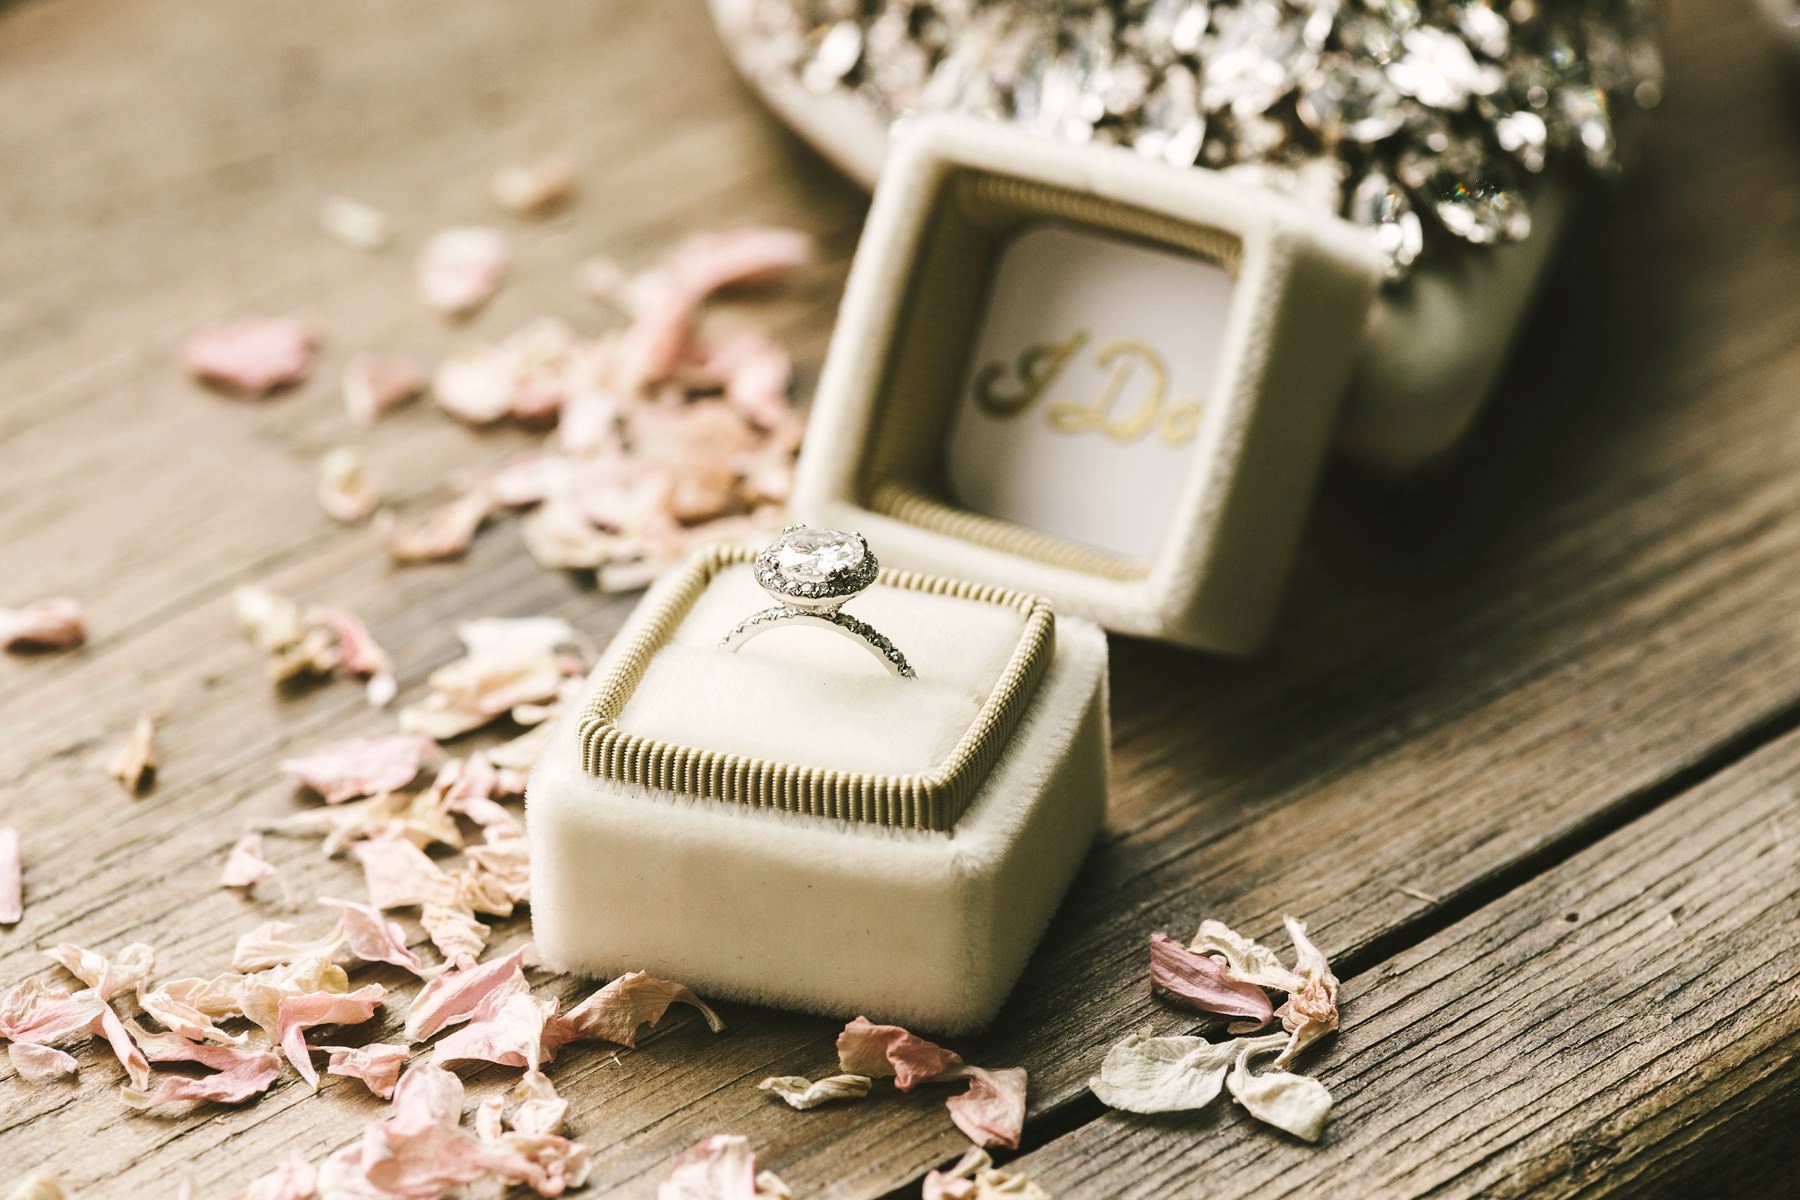 Elegant and lovely bride engagement ring